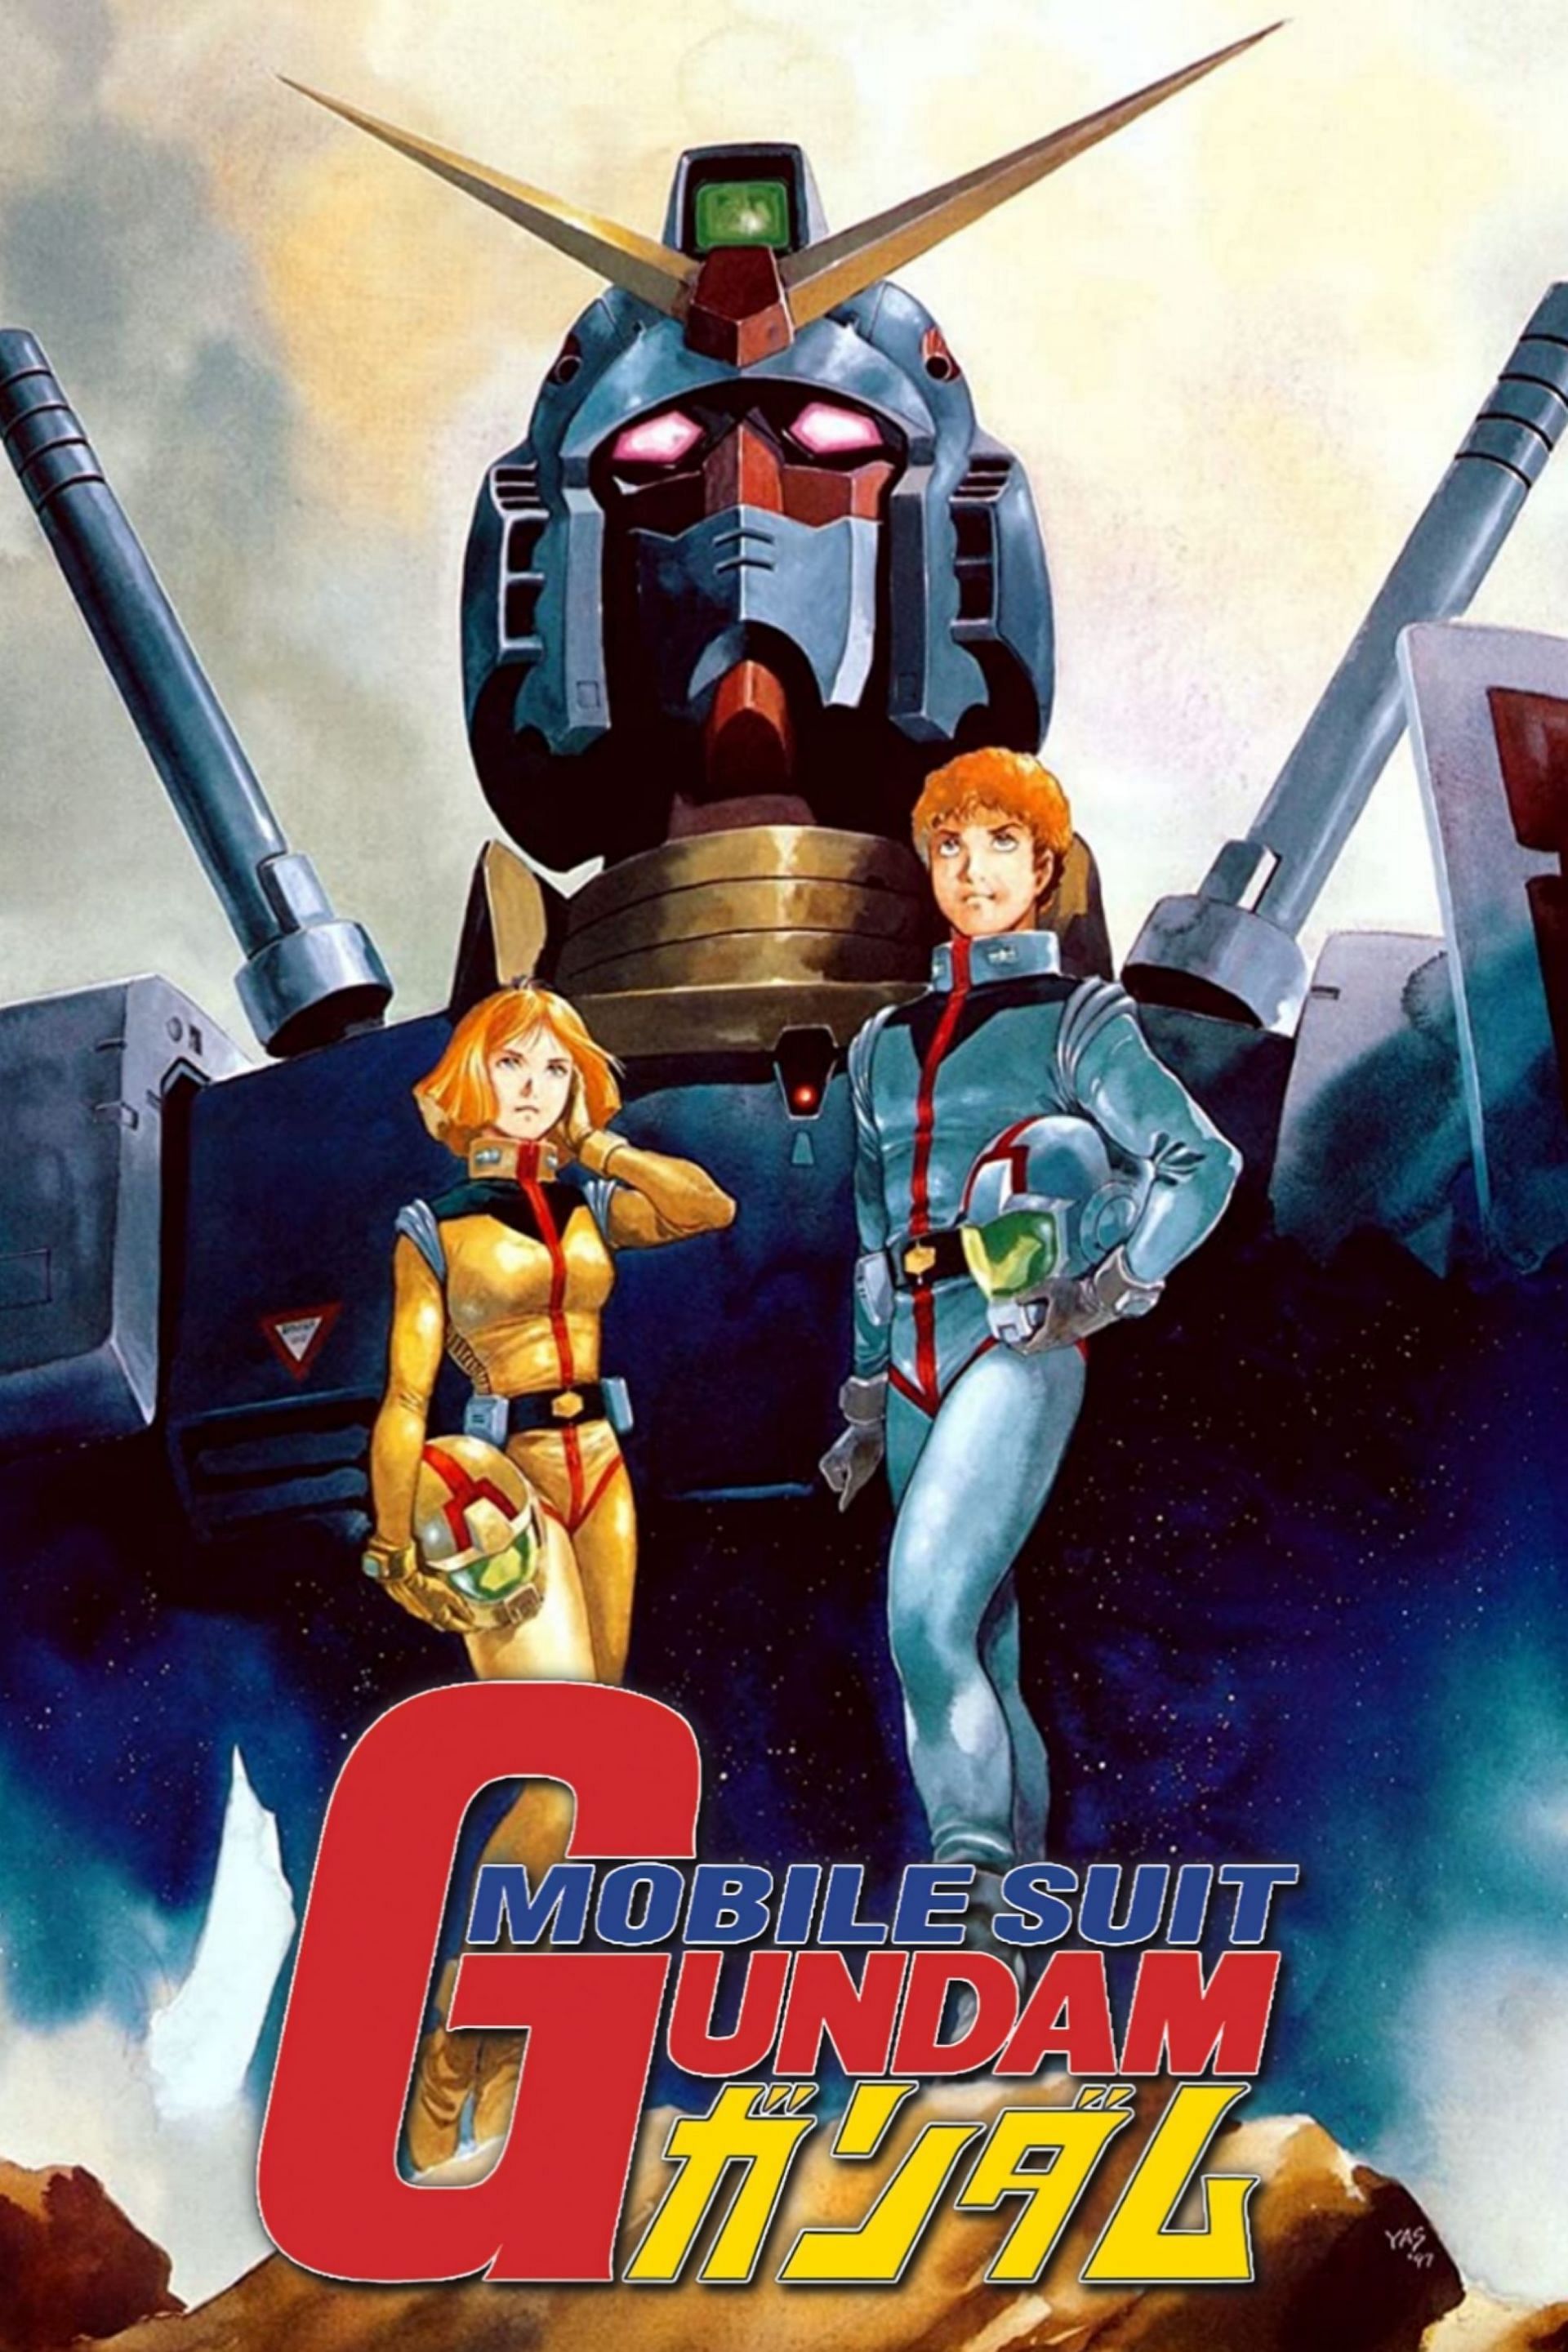 Promotional Poster for the original Mobile Suit Gundam (Image via Studio Sunrise)